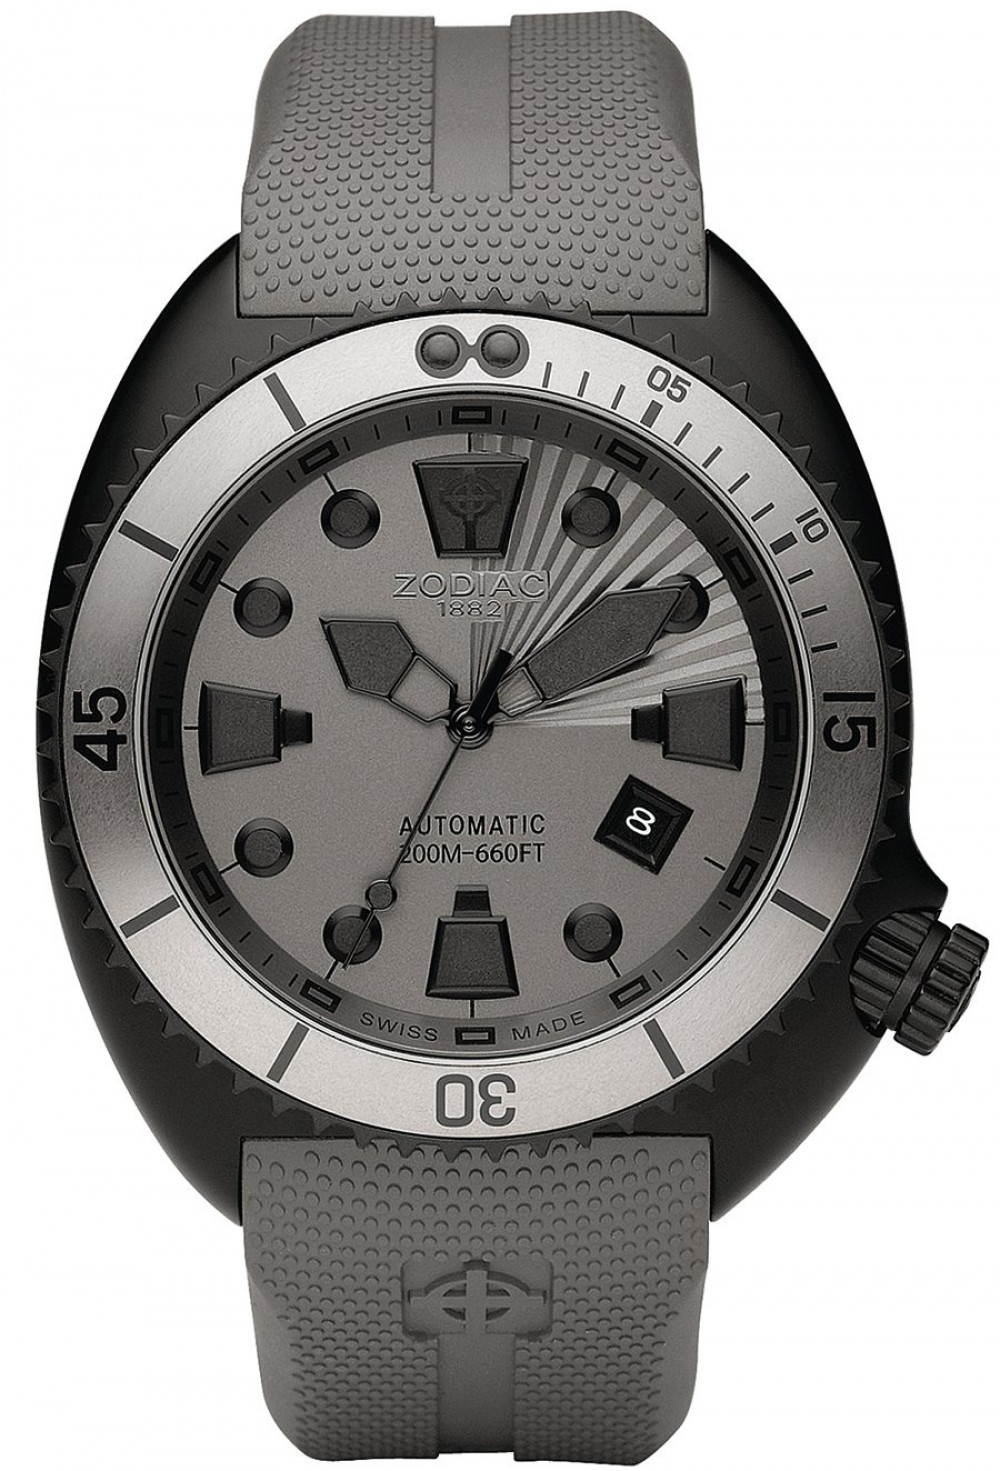 Zegarek firmy Zodiac, model Diver Oceanaire